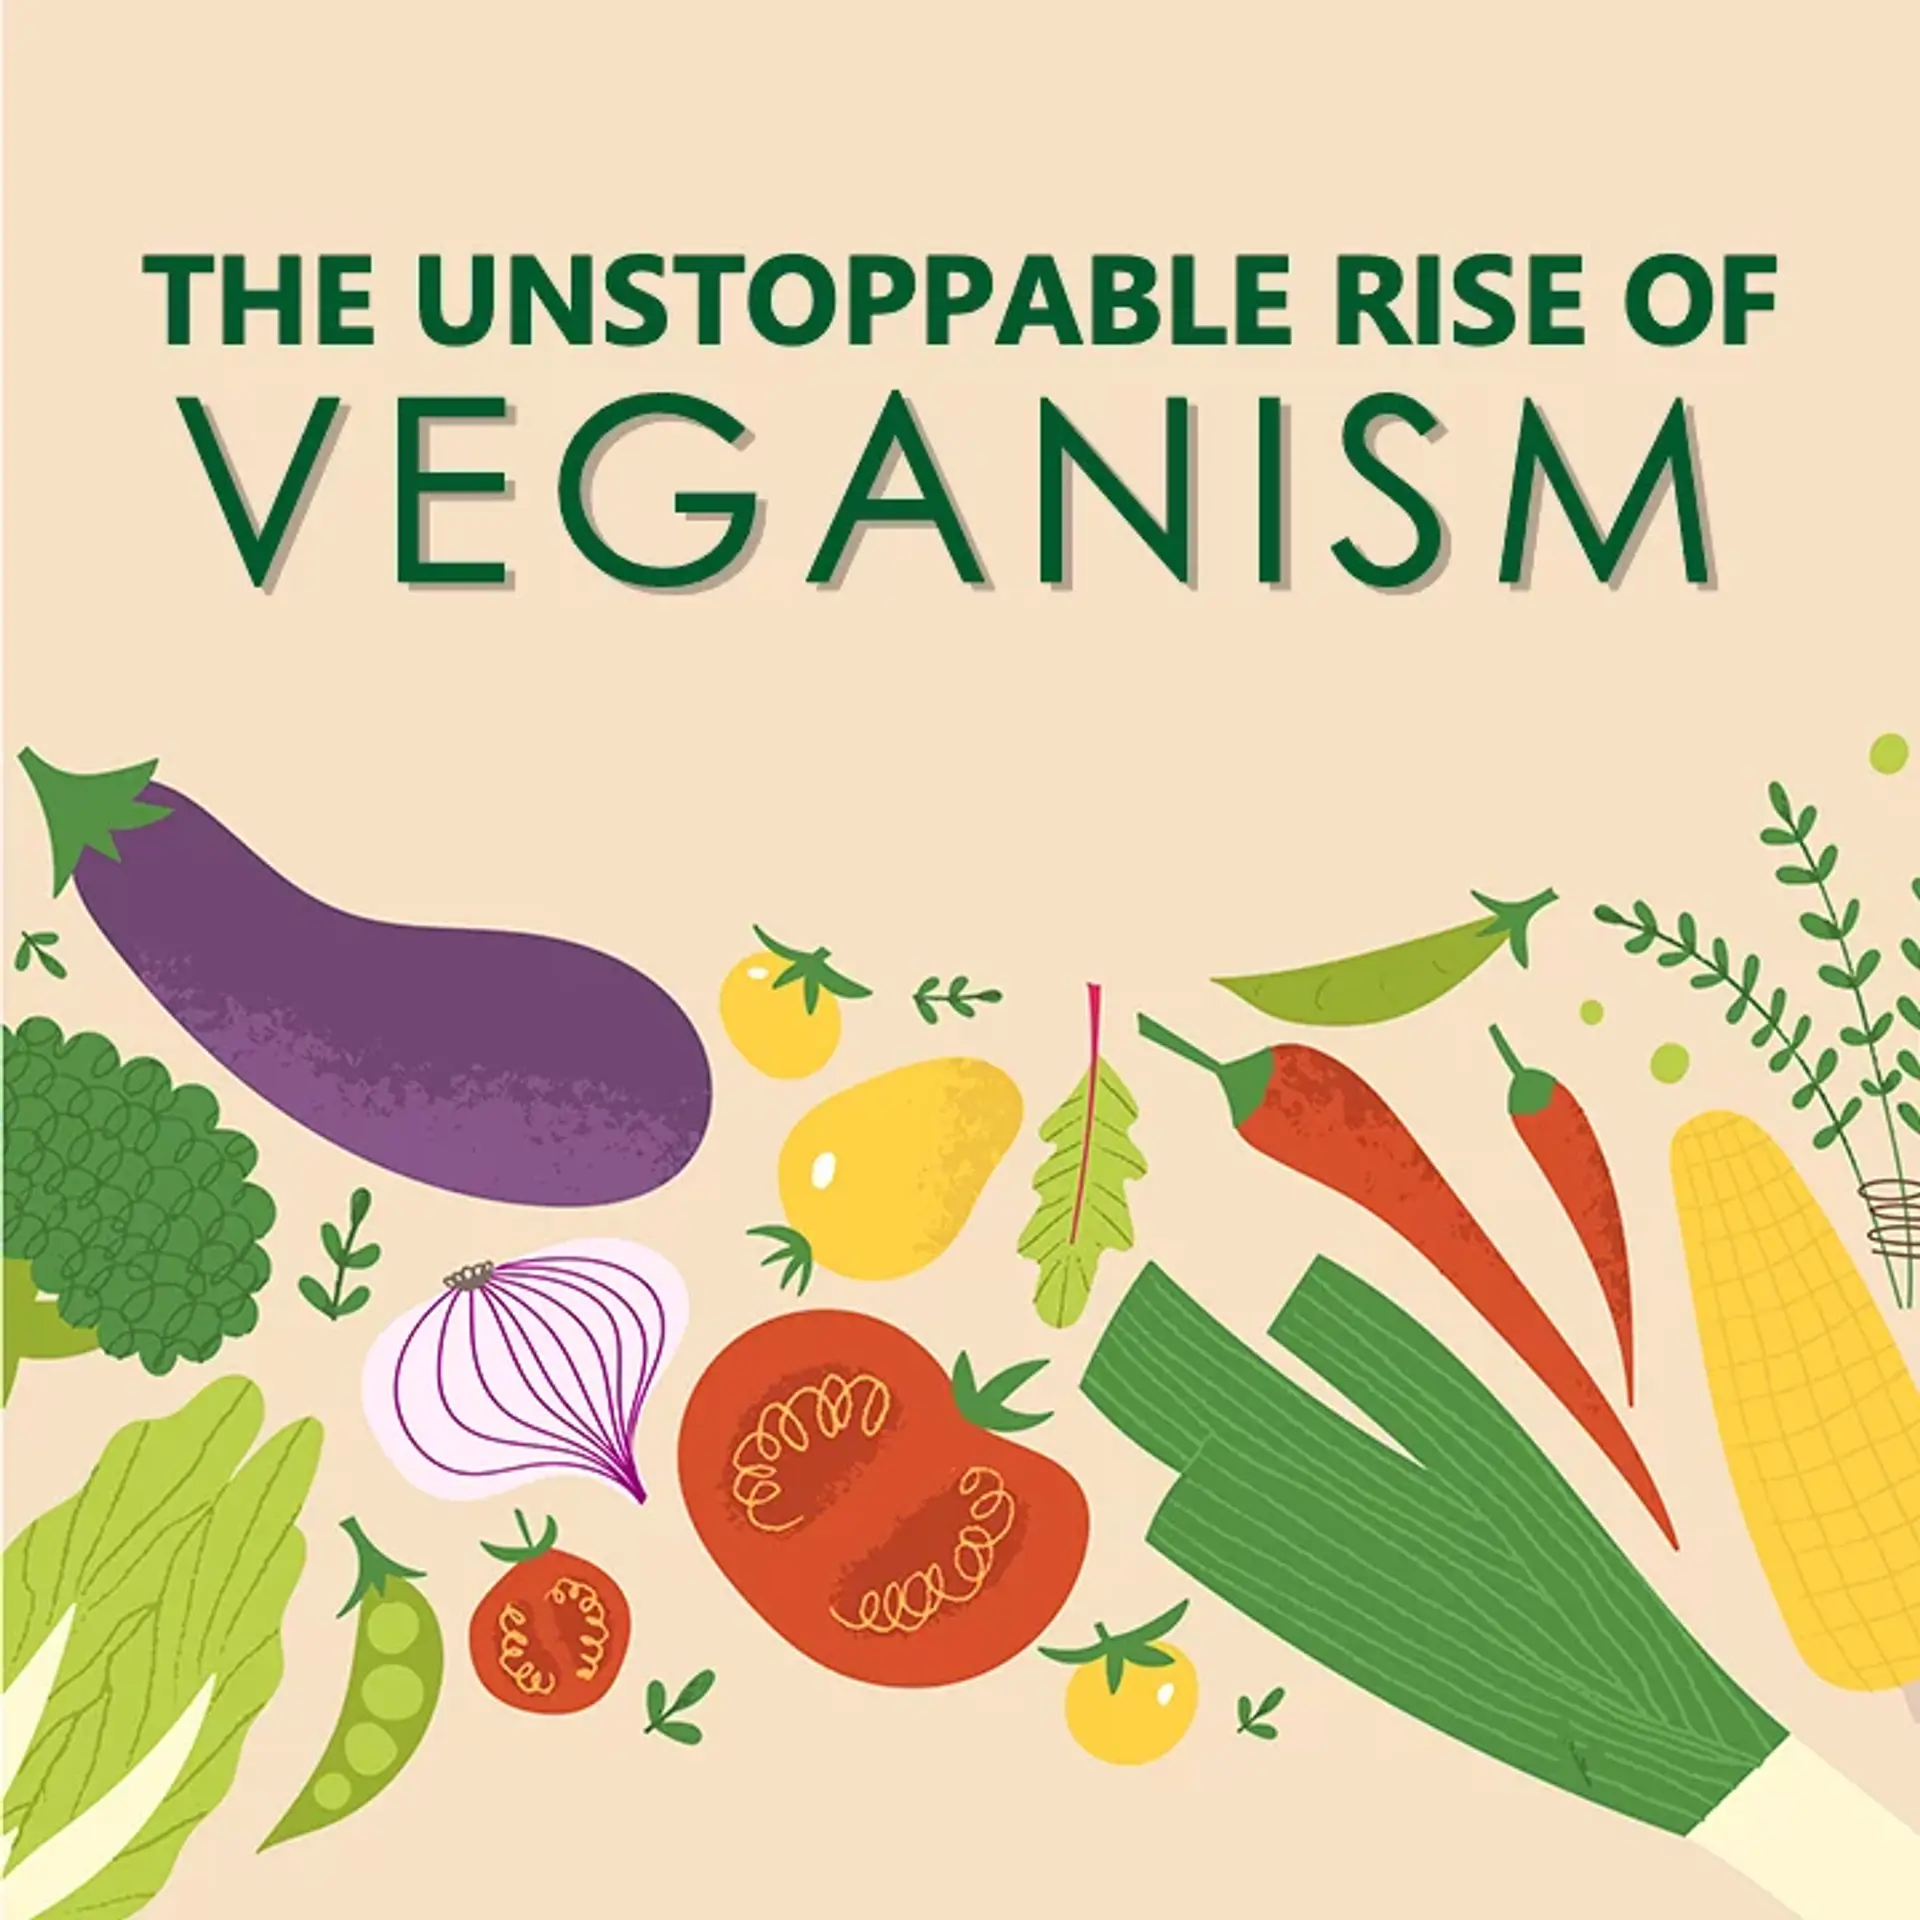 1. The History of Veganism